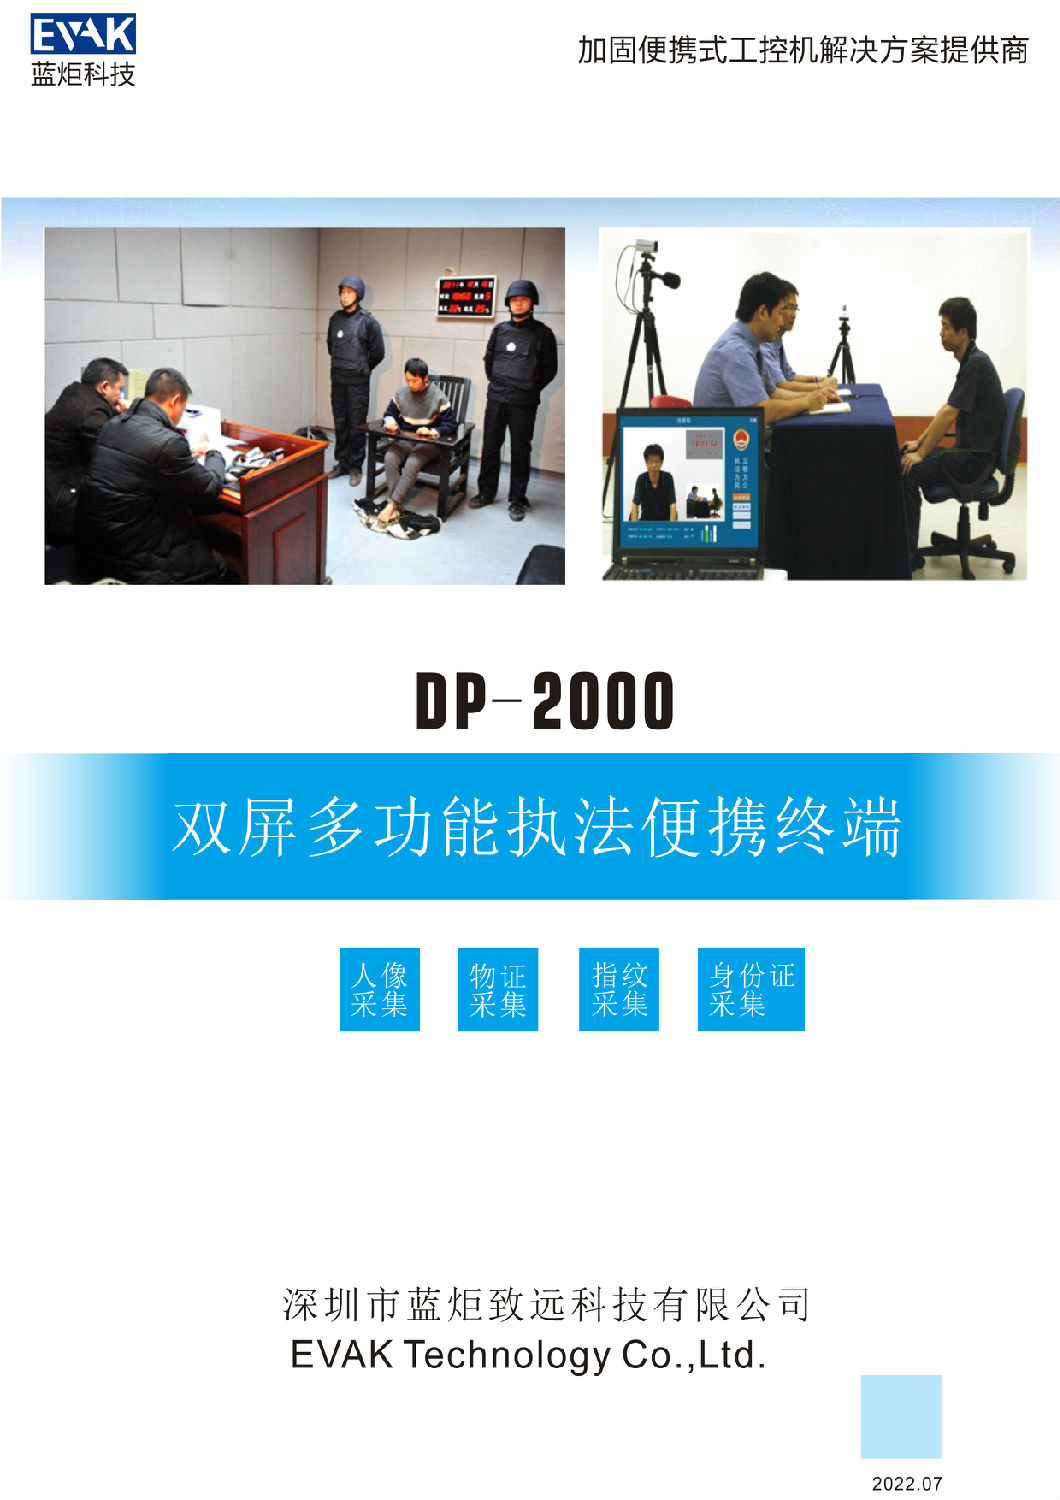 DP-2000双屏多功能执法便携终端-1.jpg